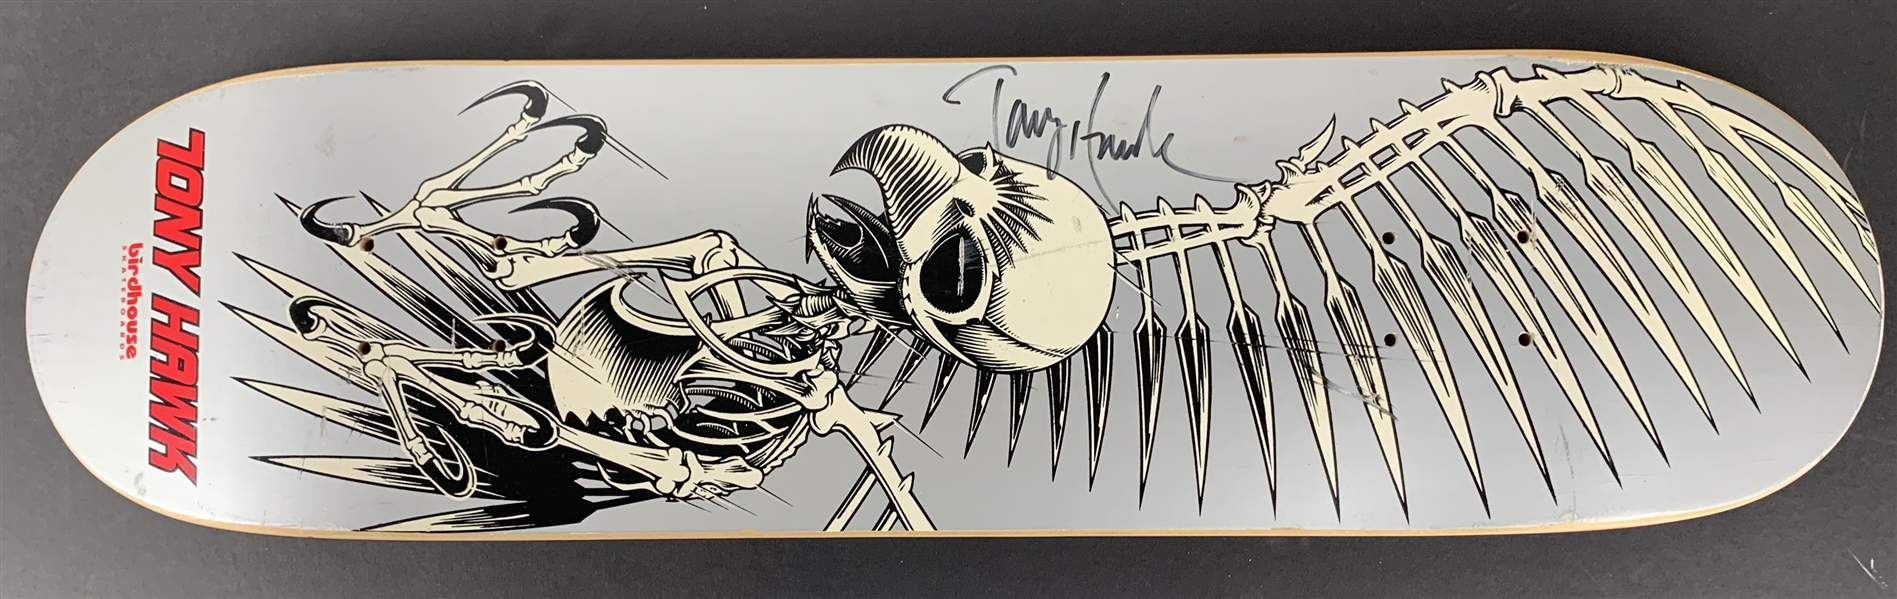 Tony Hawk Rare Signed 2007 Silver Flight Birdhouse Skateboard (Beckett/BAS Guaranteed)